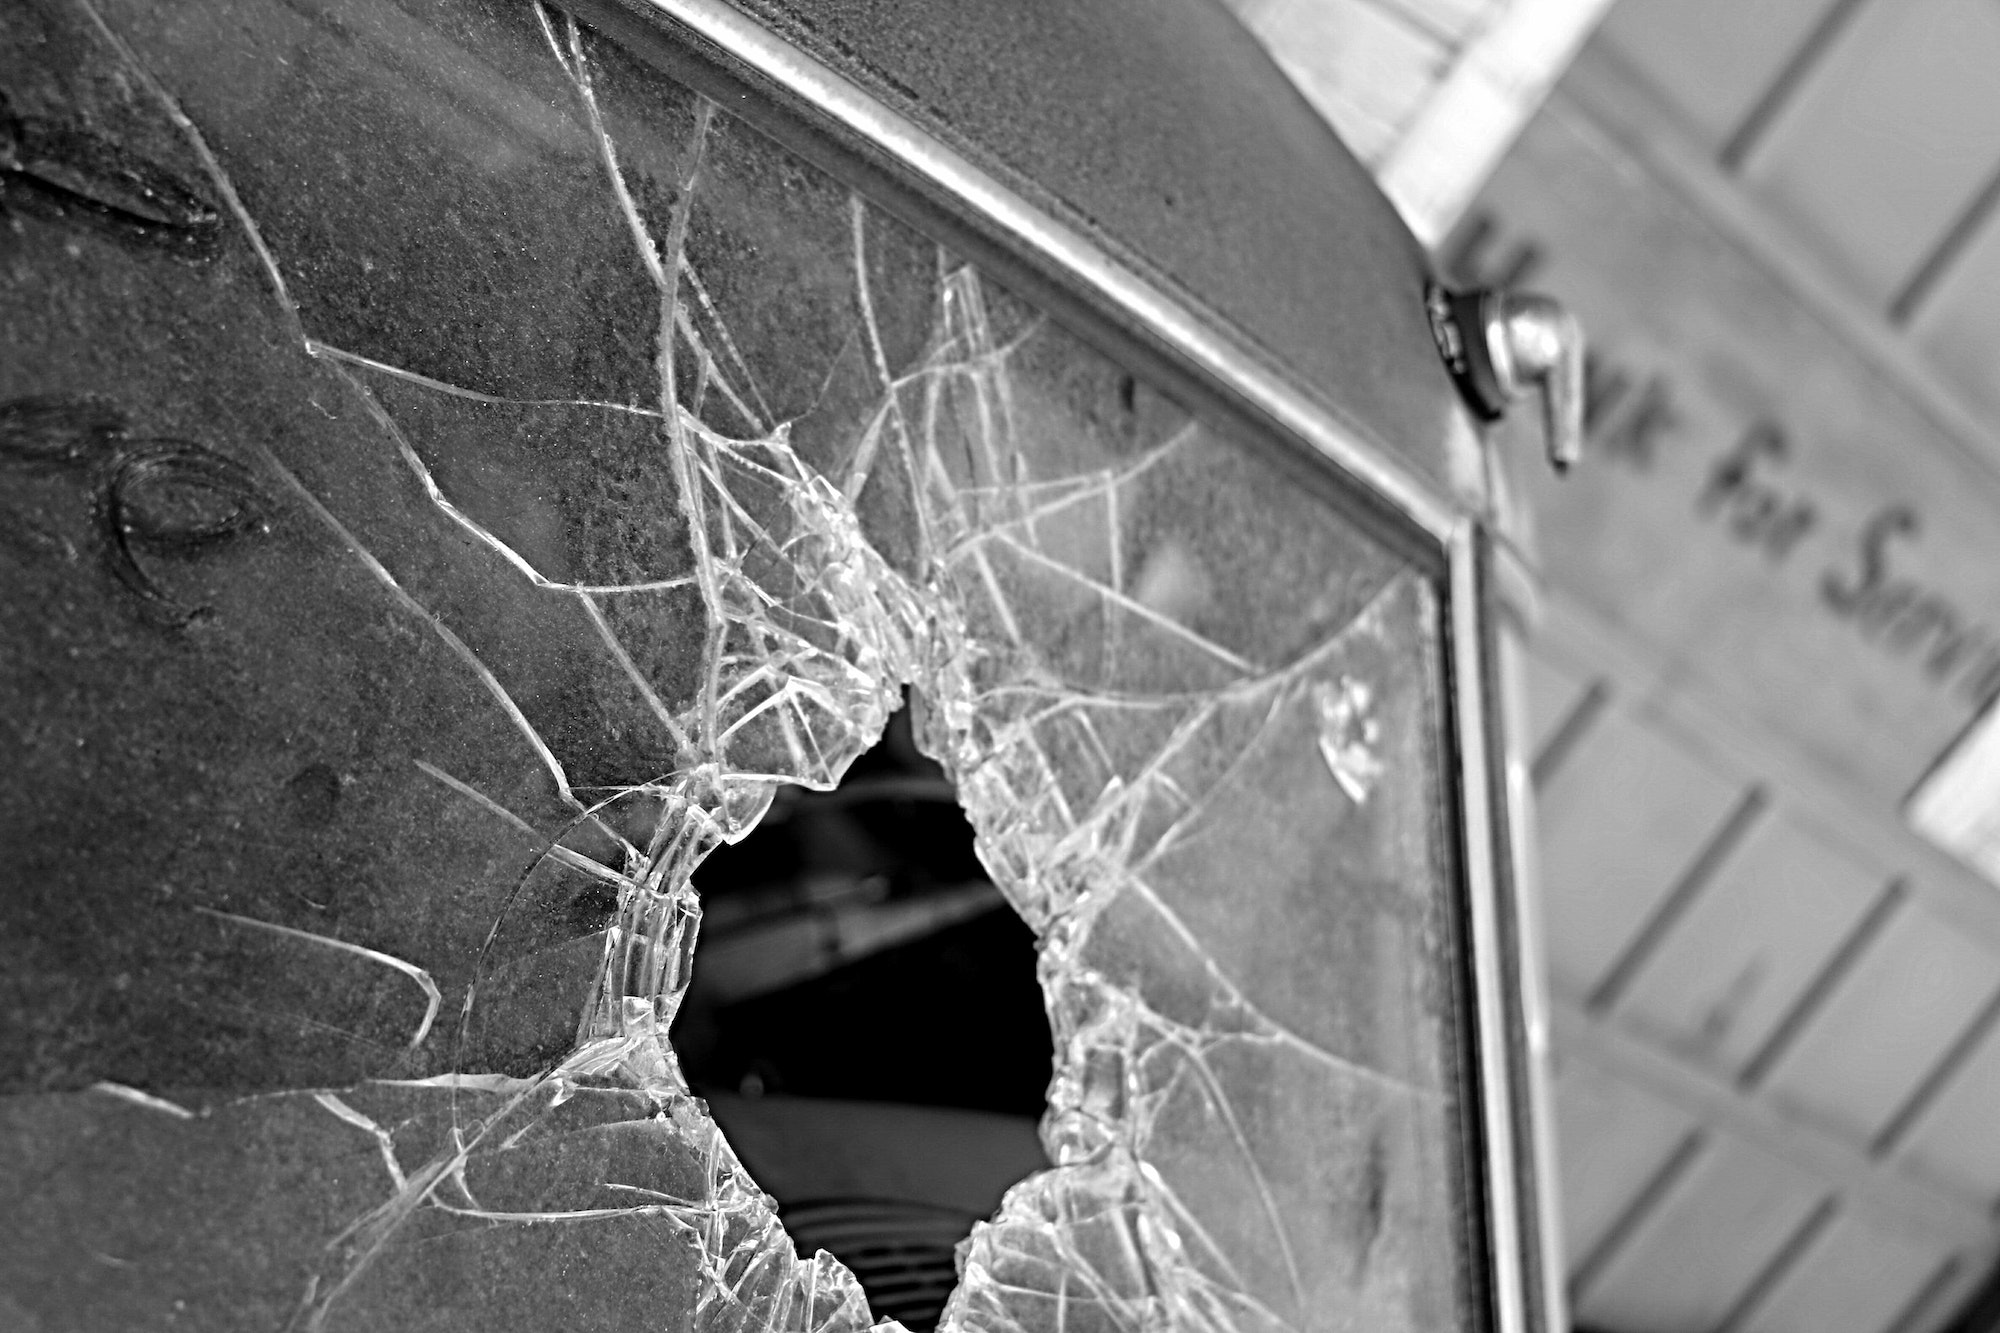 Broken Glass: Monochromatic image of shattered windshield of vintage car in old garage.